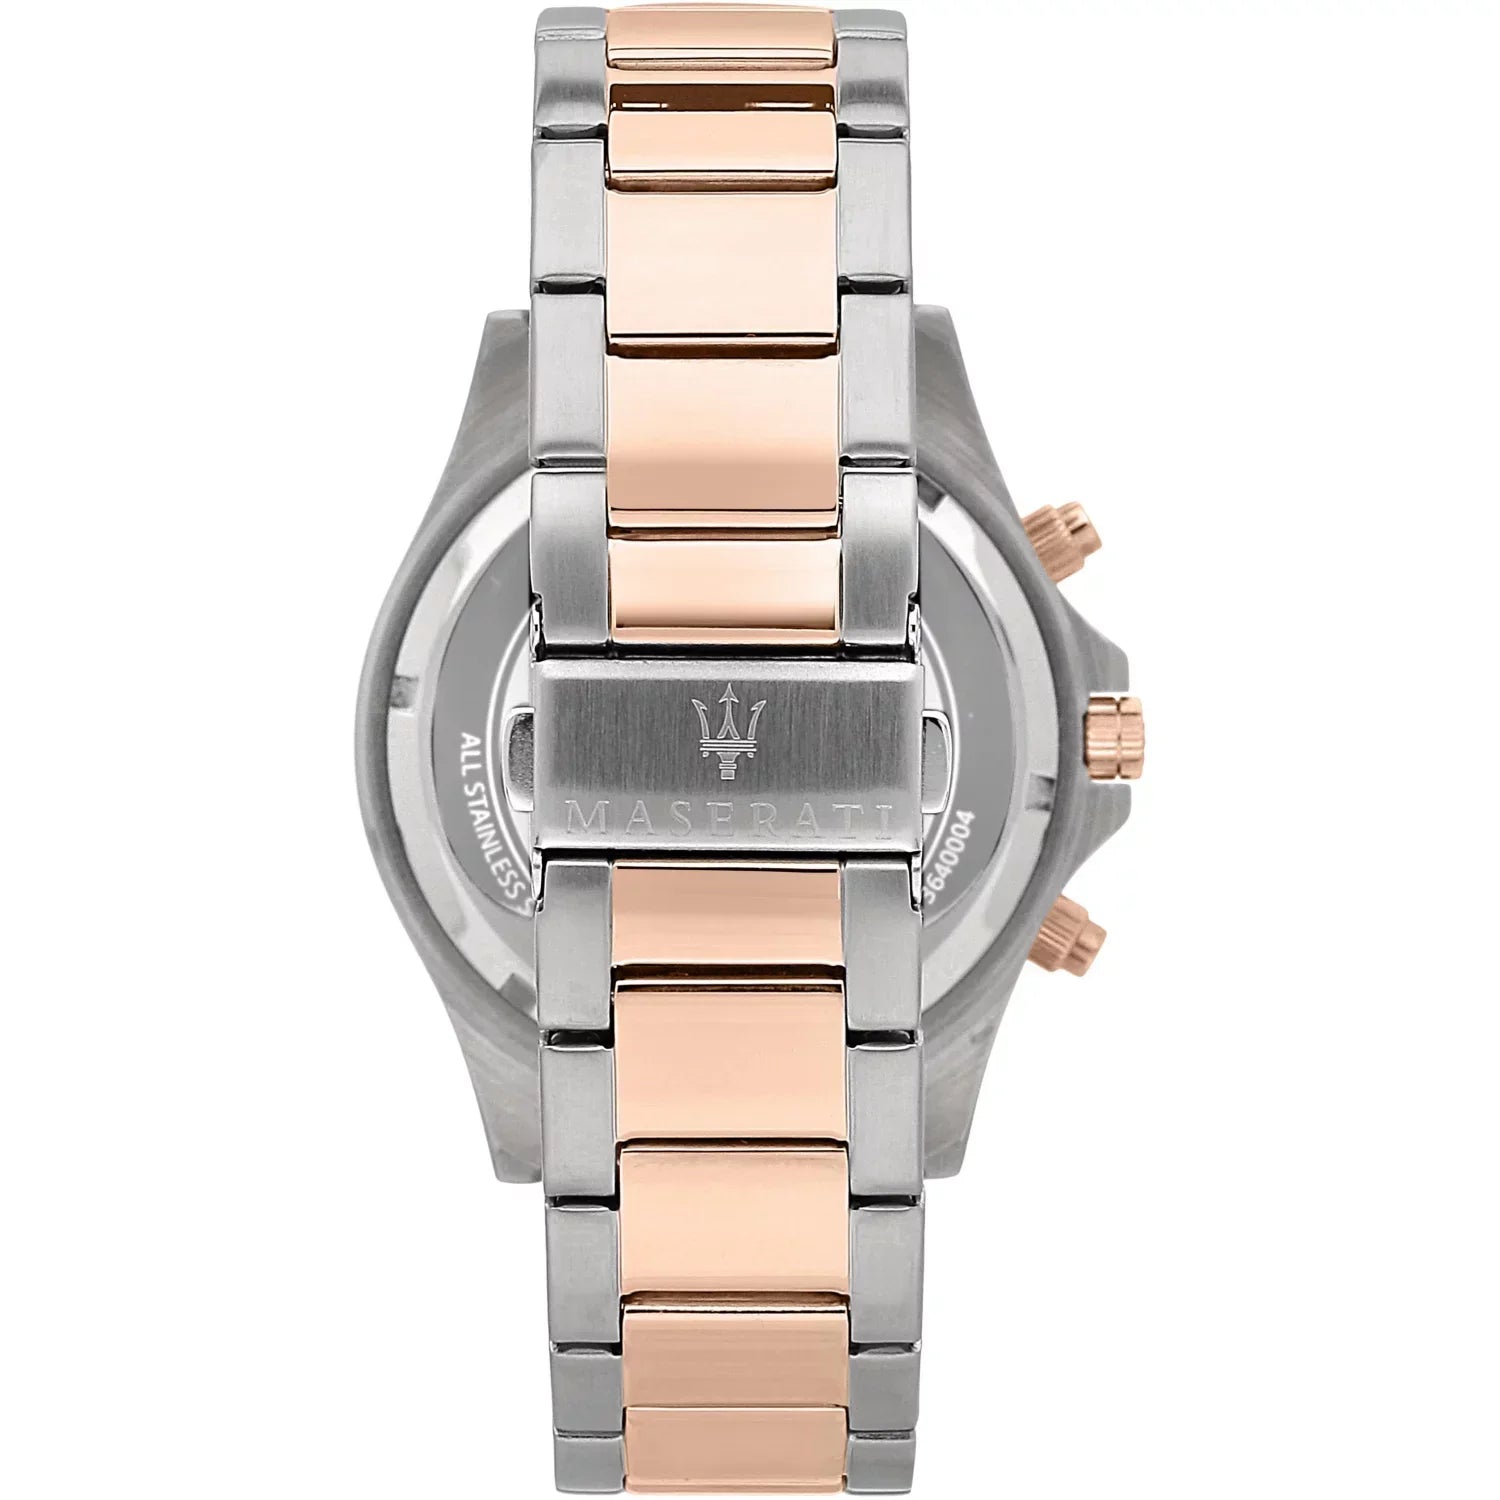 Maserati SFIDA Rose Quartz Black Dial Stainless Steel Watch For Men - R8873640002